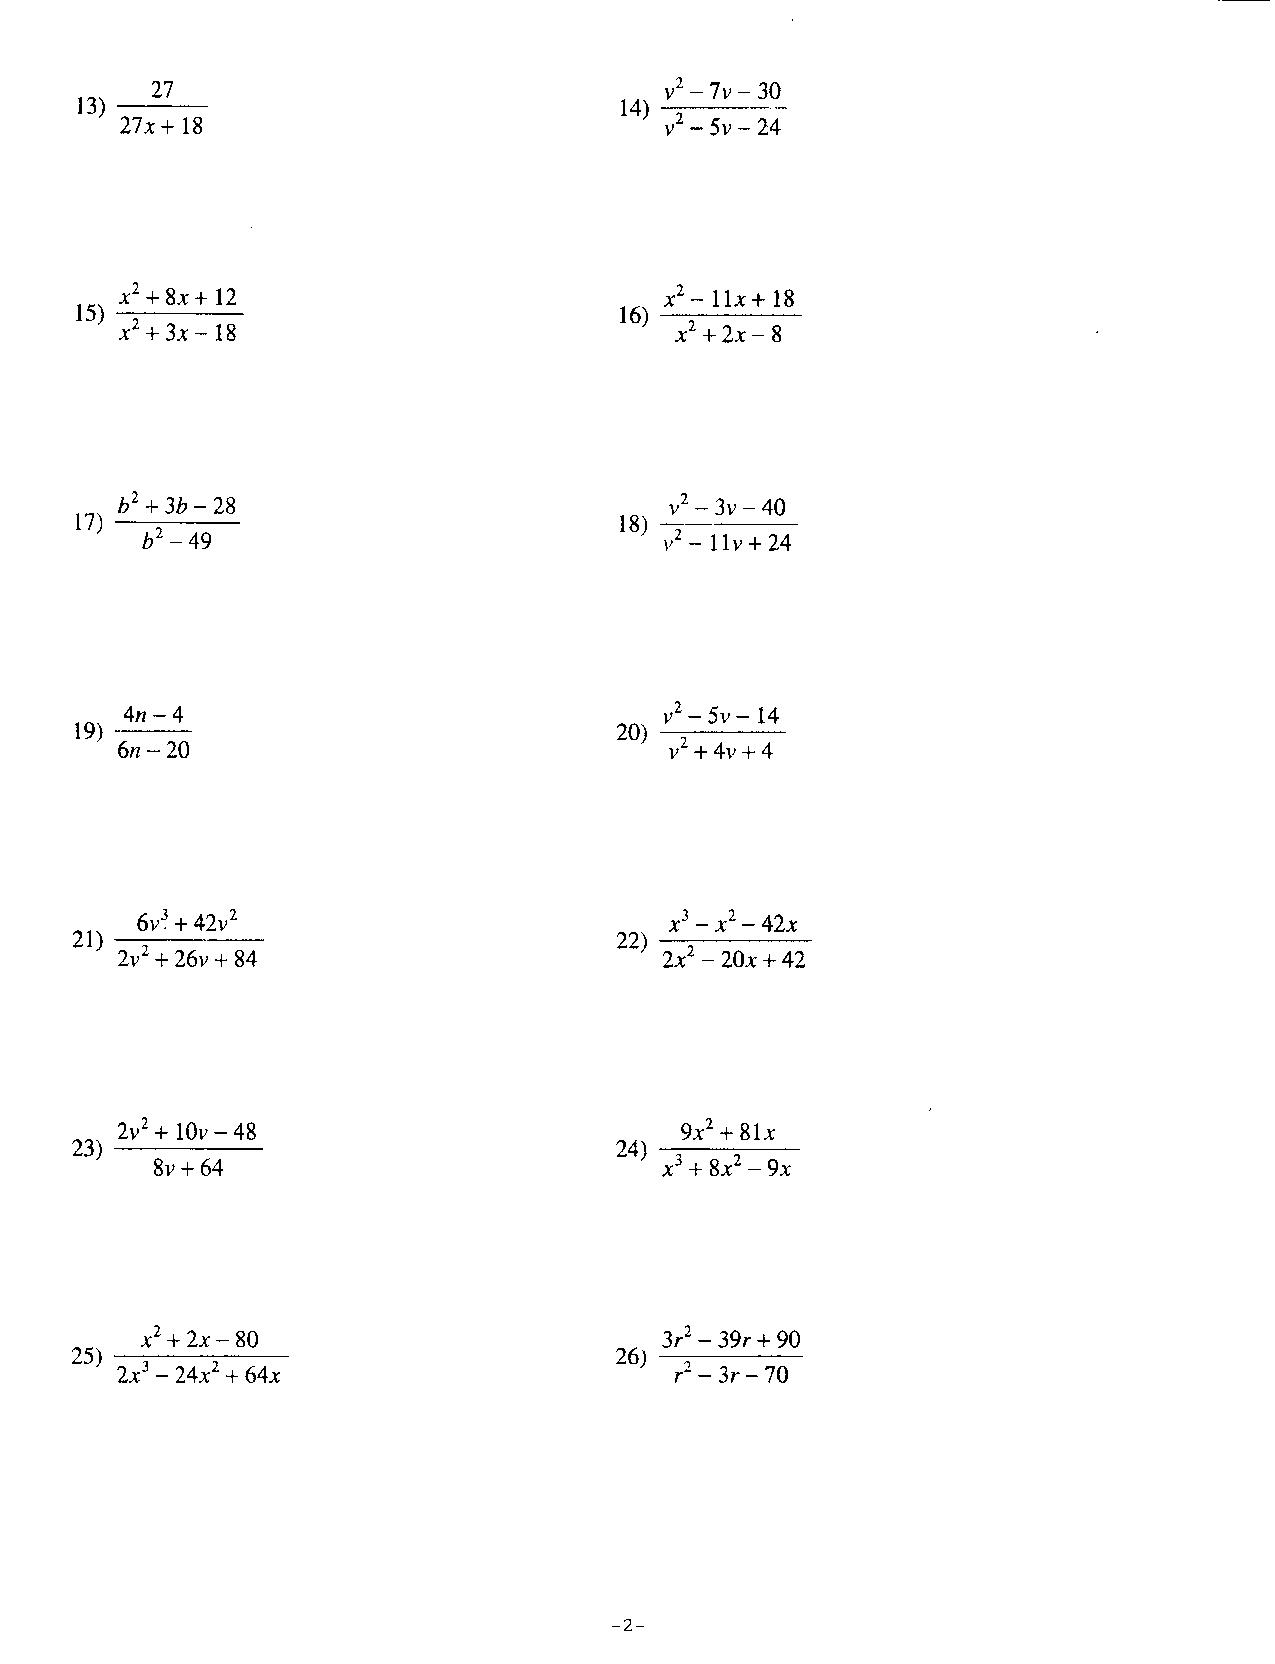 Simplifying Algebraic Expressions Worksheet Image